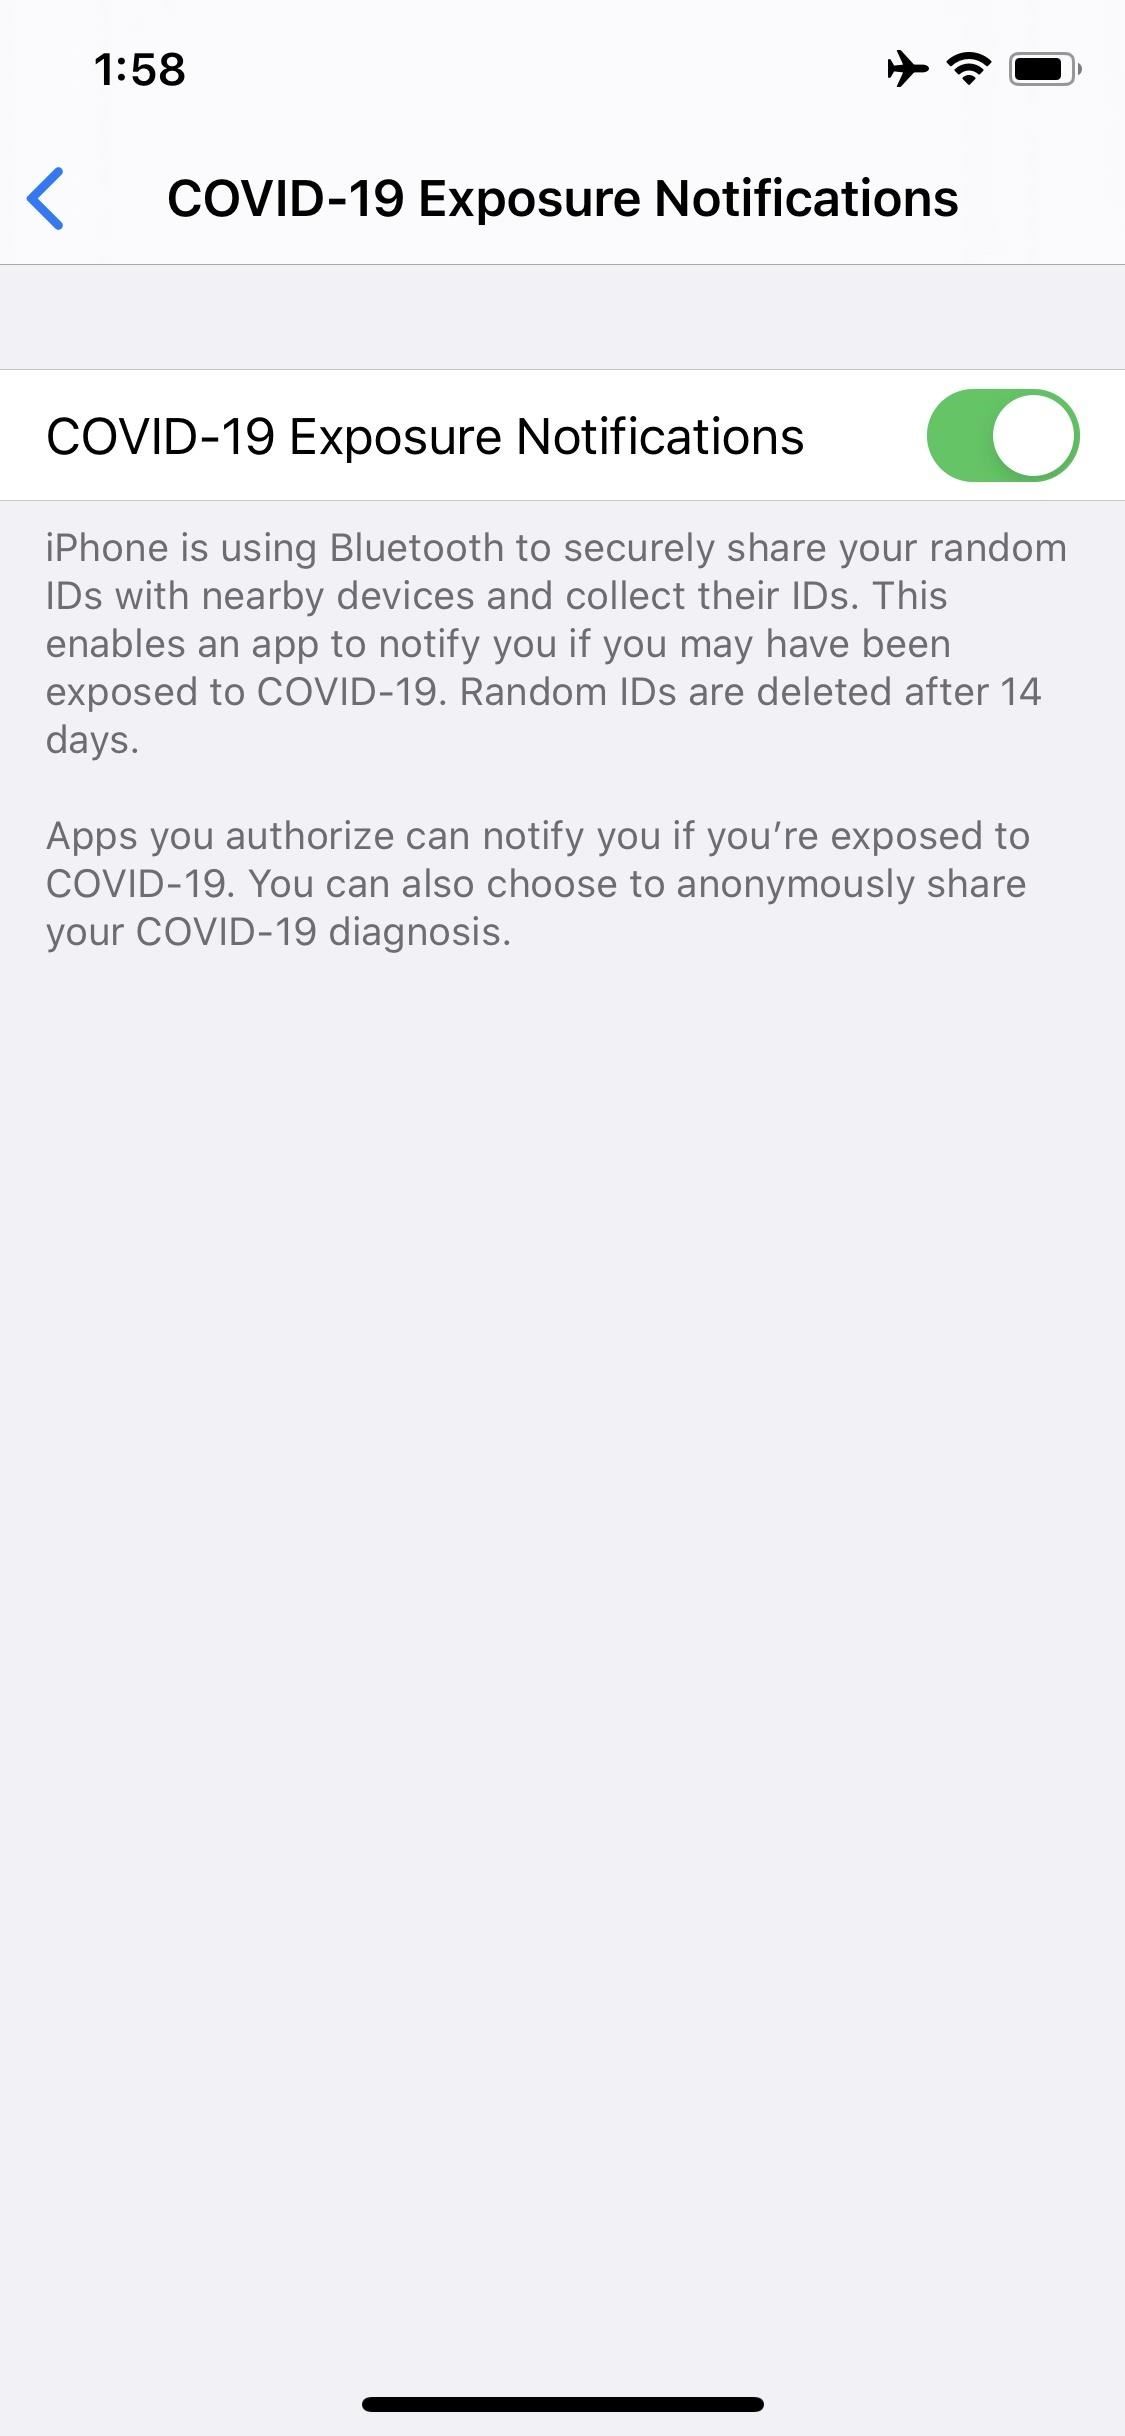 Apple's iOS 13.5 Developer Beta 3 Update Includes COVID-19 Exposure Notifications & Face ID Improvements